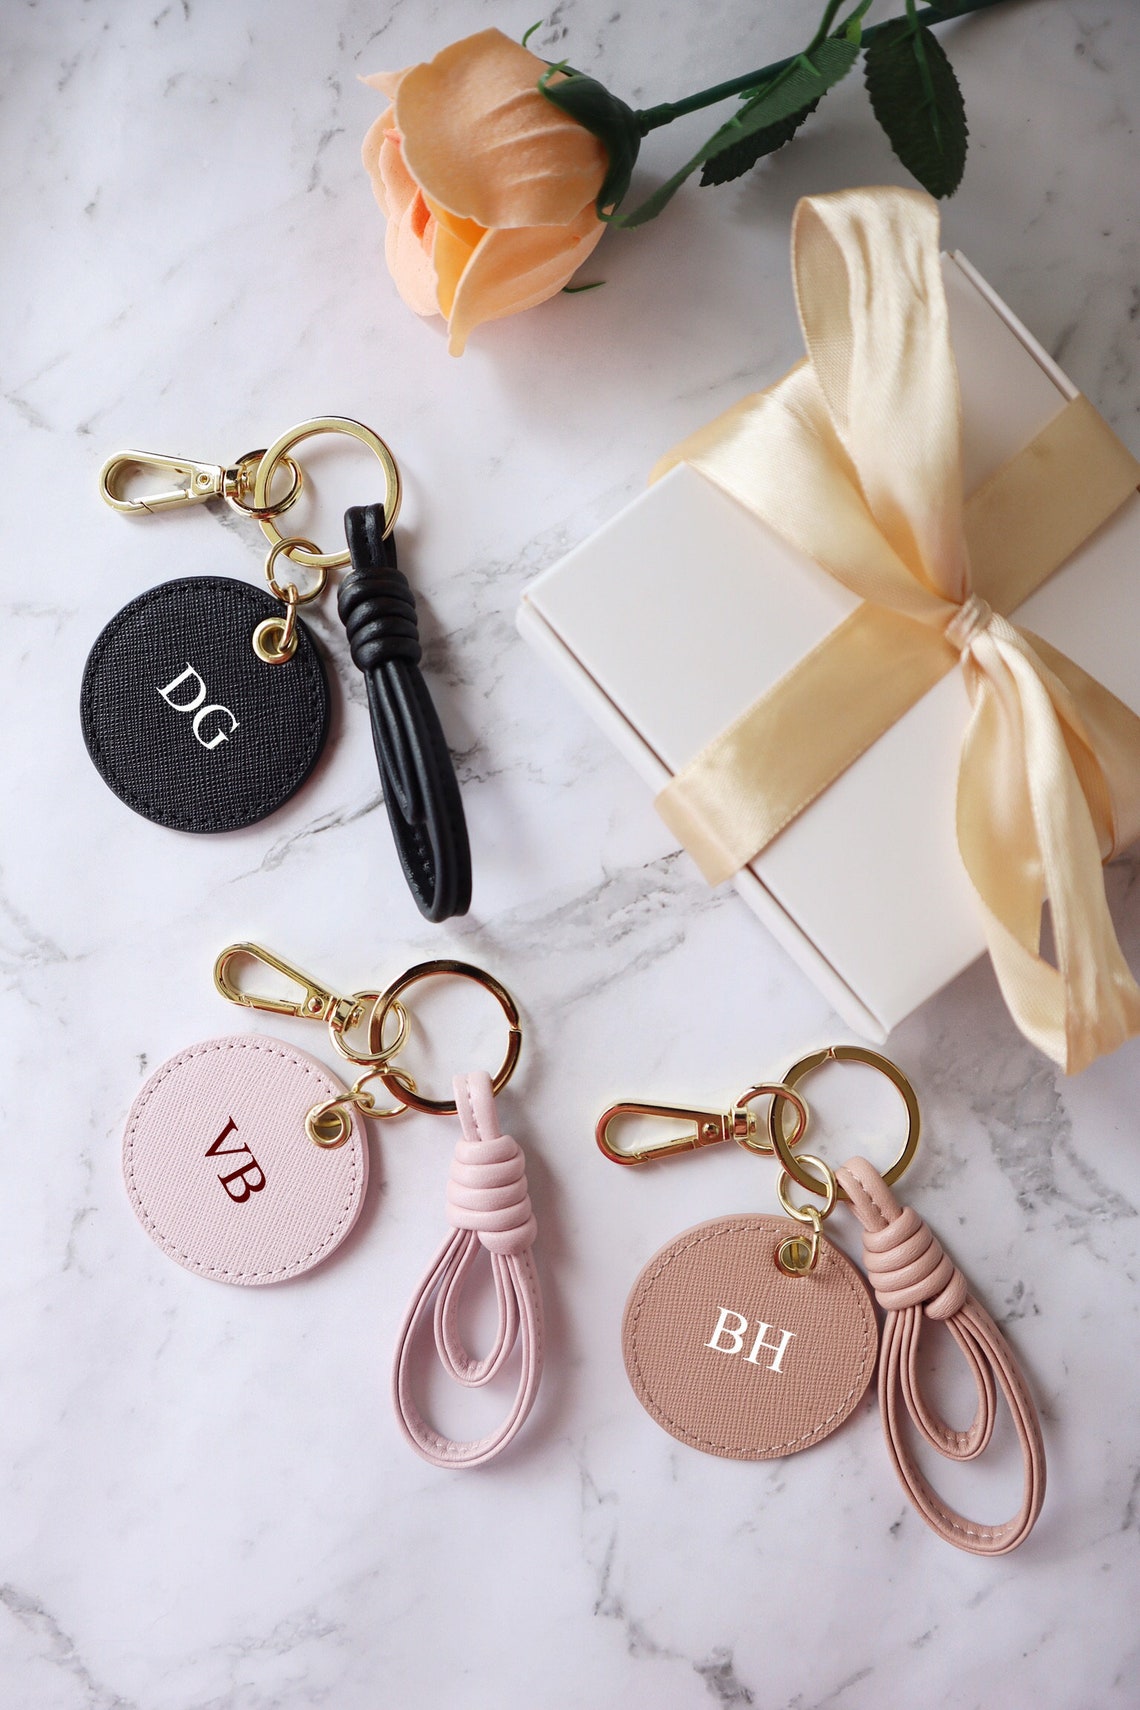 Personalised leather key ring genuine leather keychain | Etsy